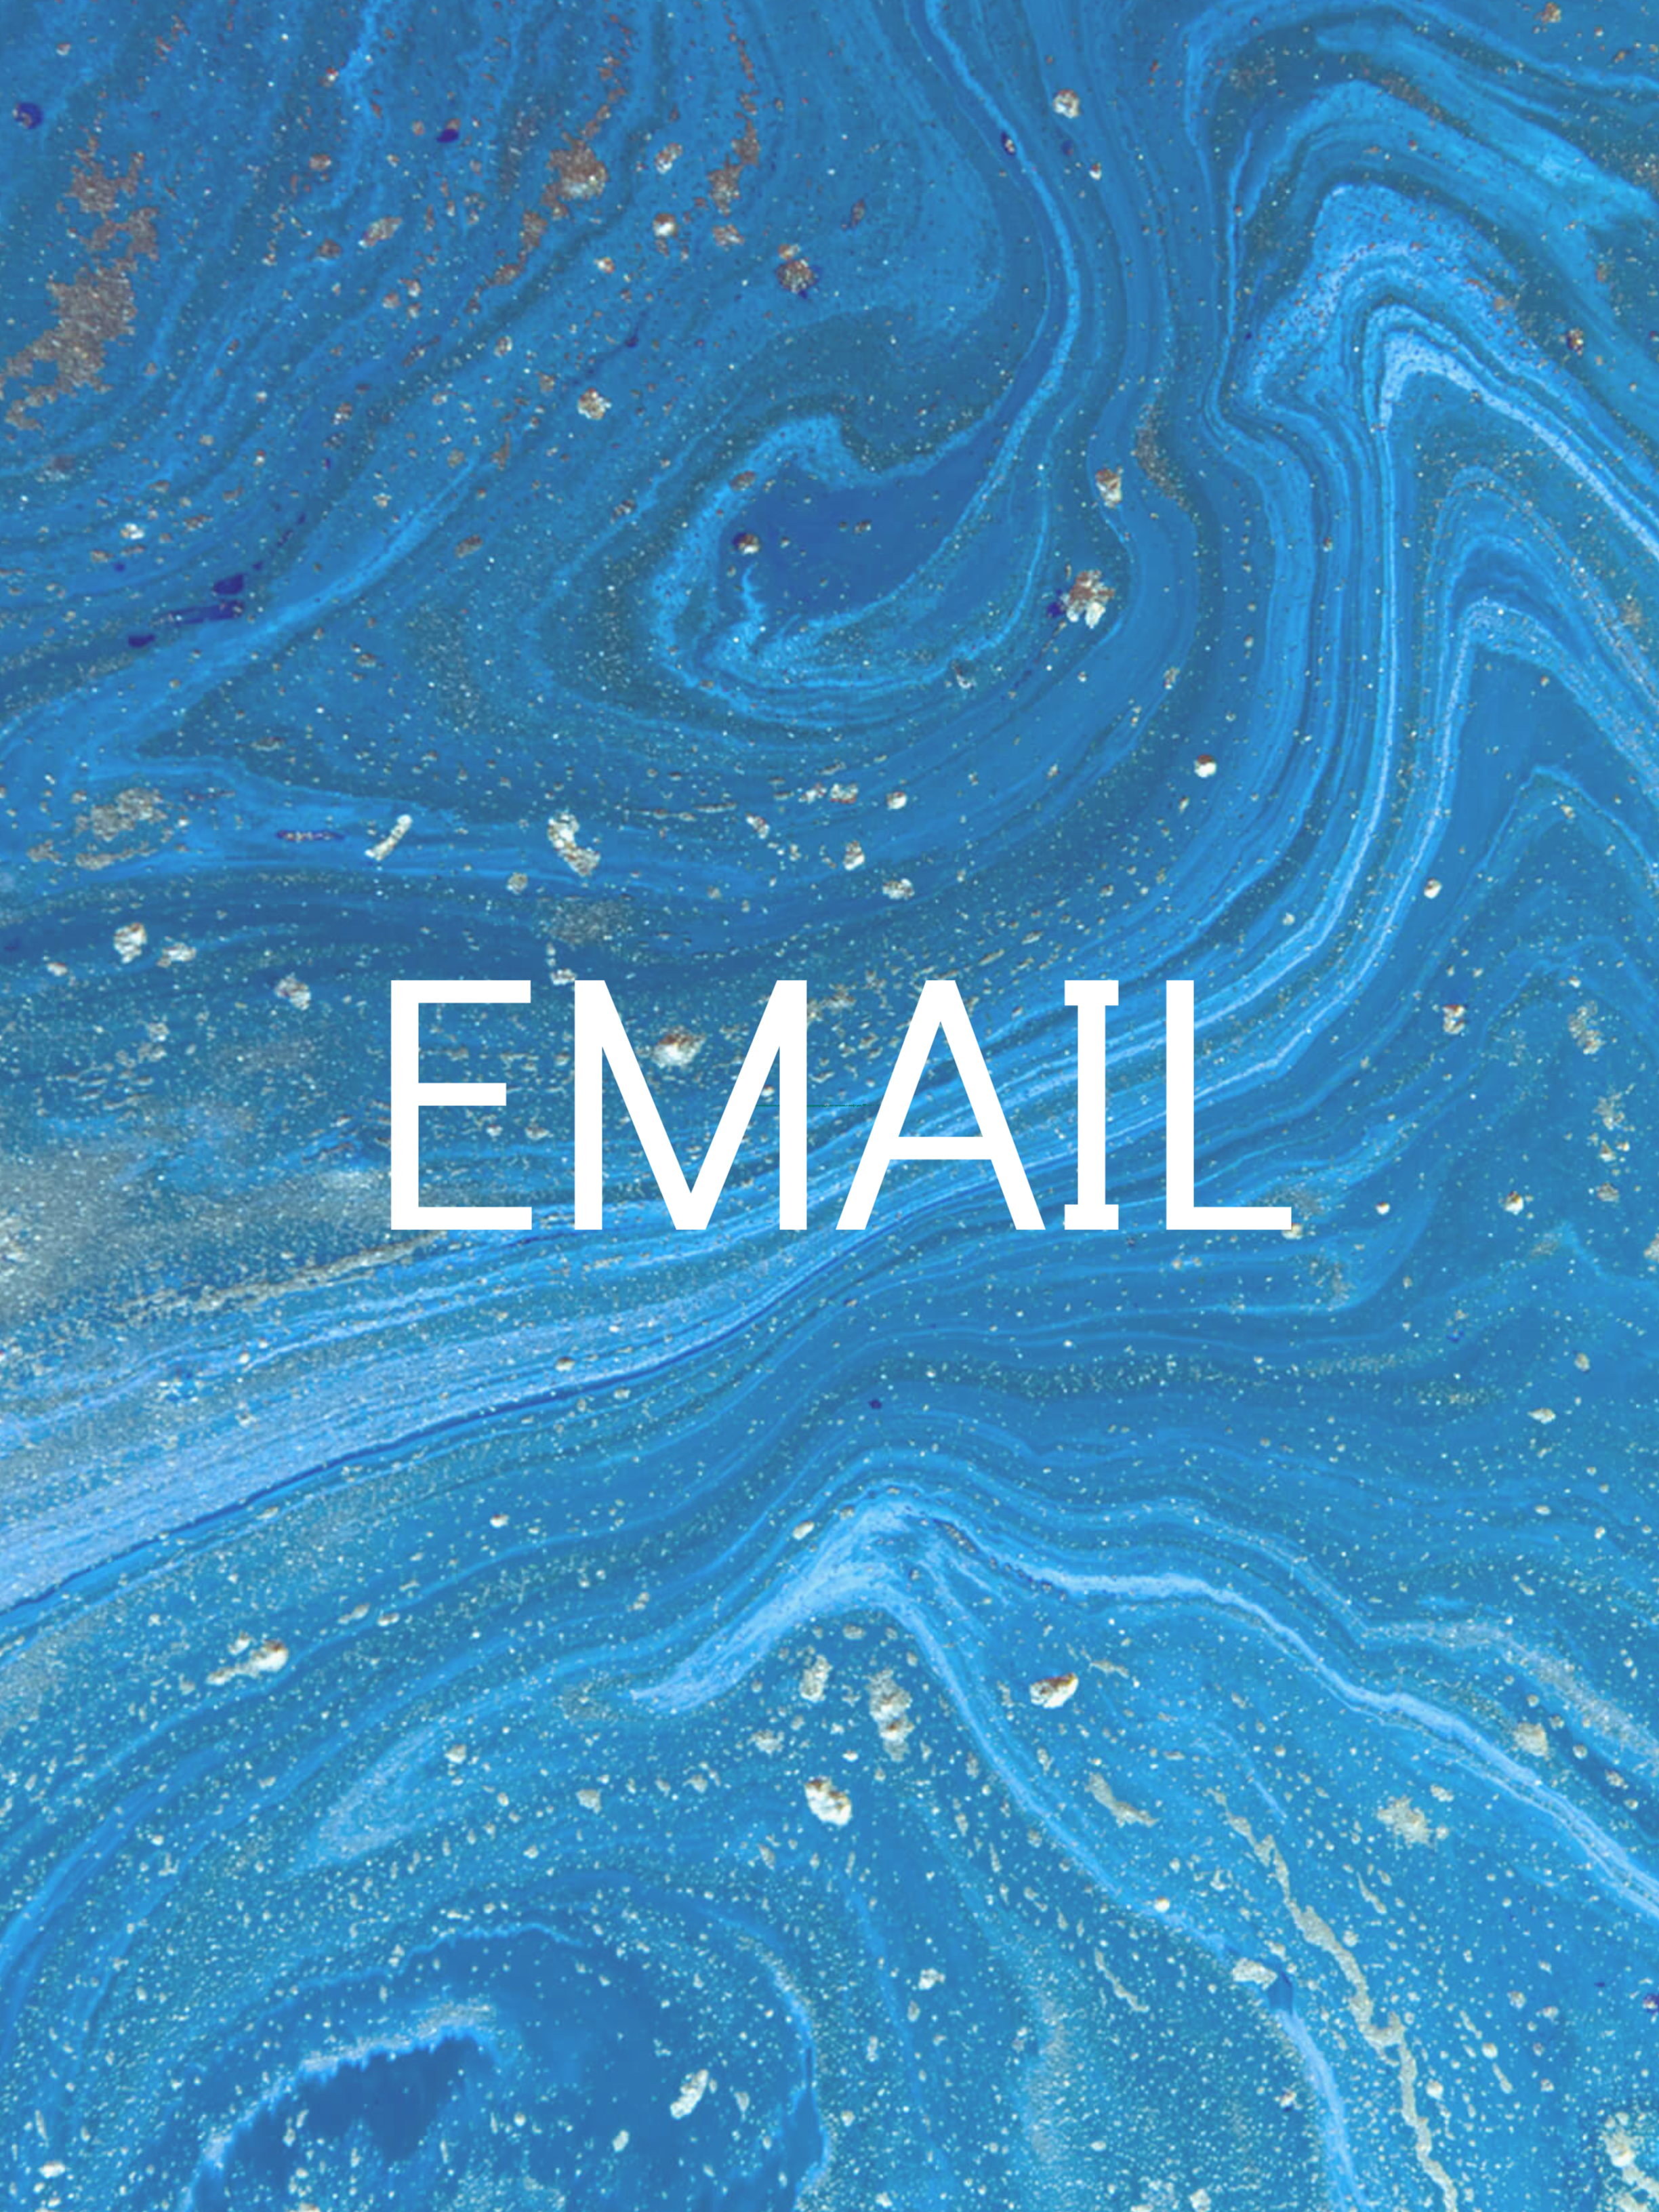 Email Management - Information Management - Focus